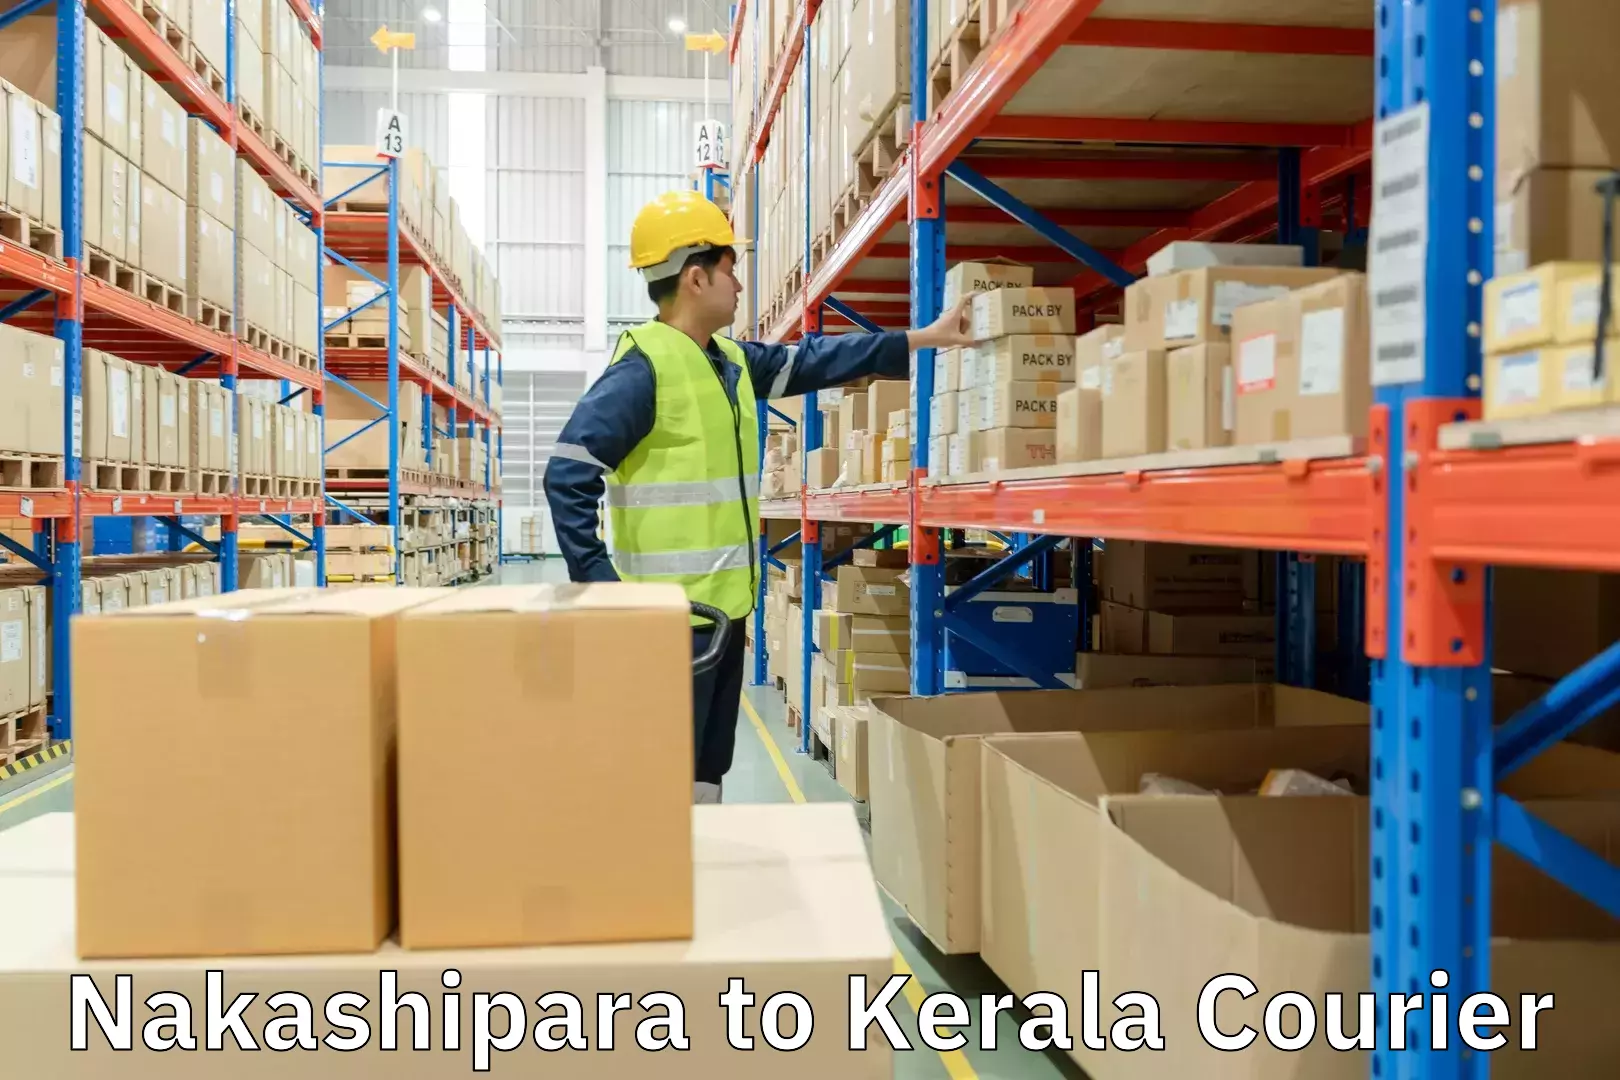 Express logistics service Nakashipara to Kerala